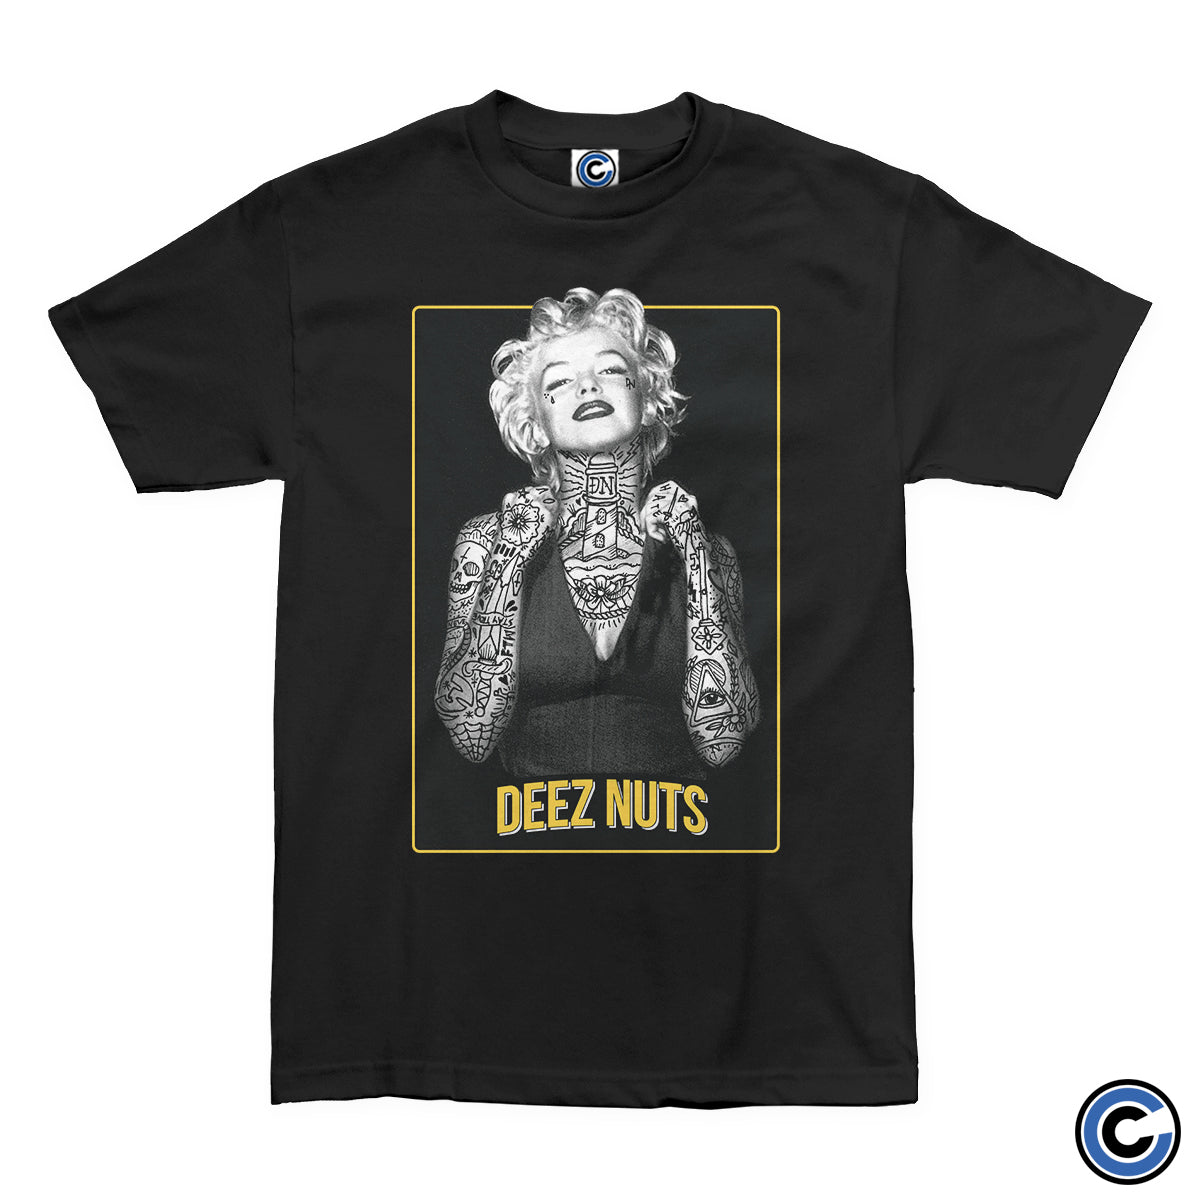 Deez Nuts "Tattoo Girl" Shirt